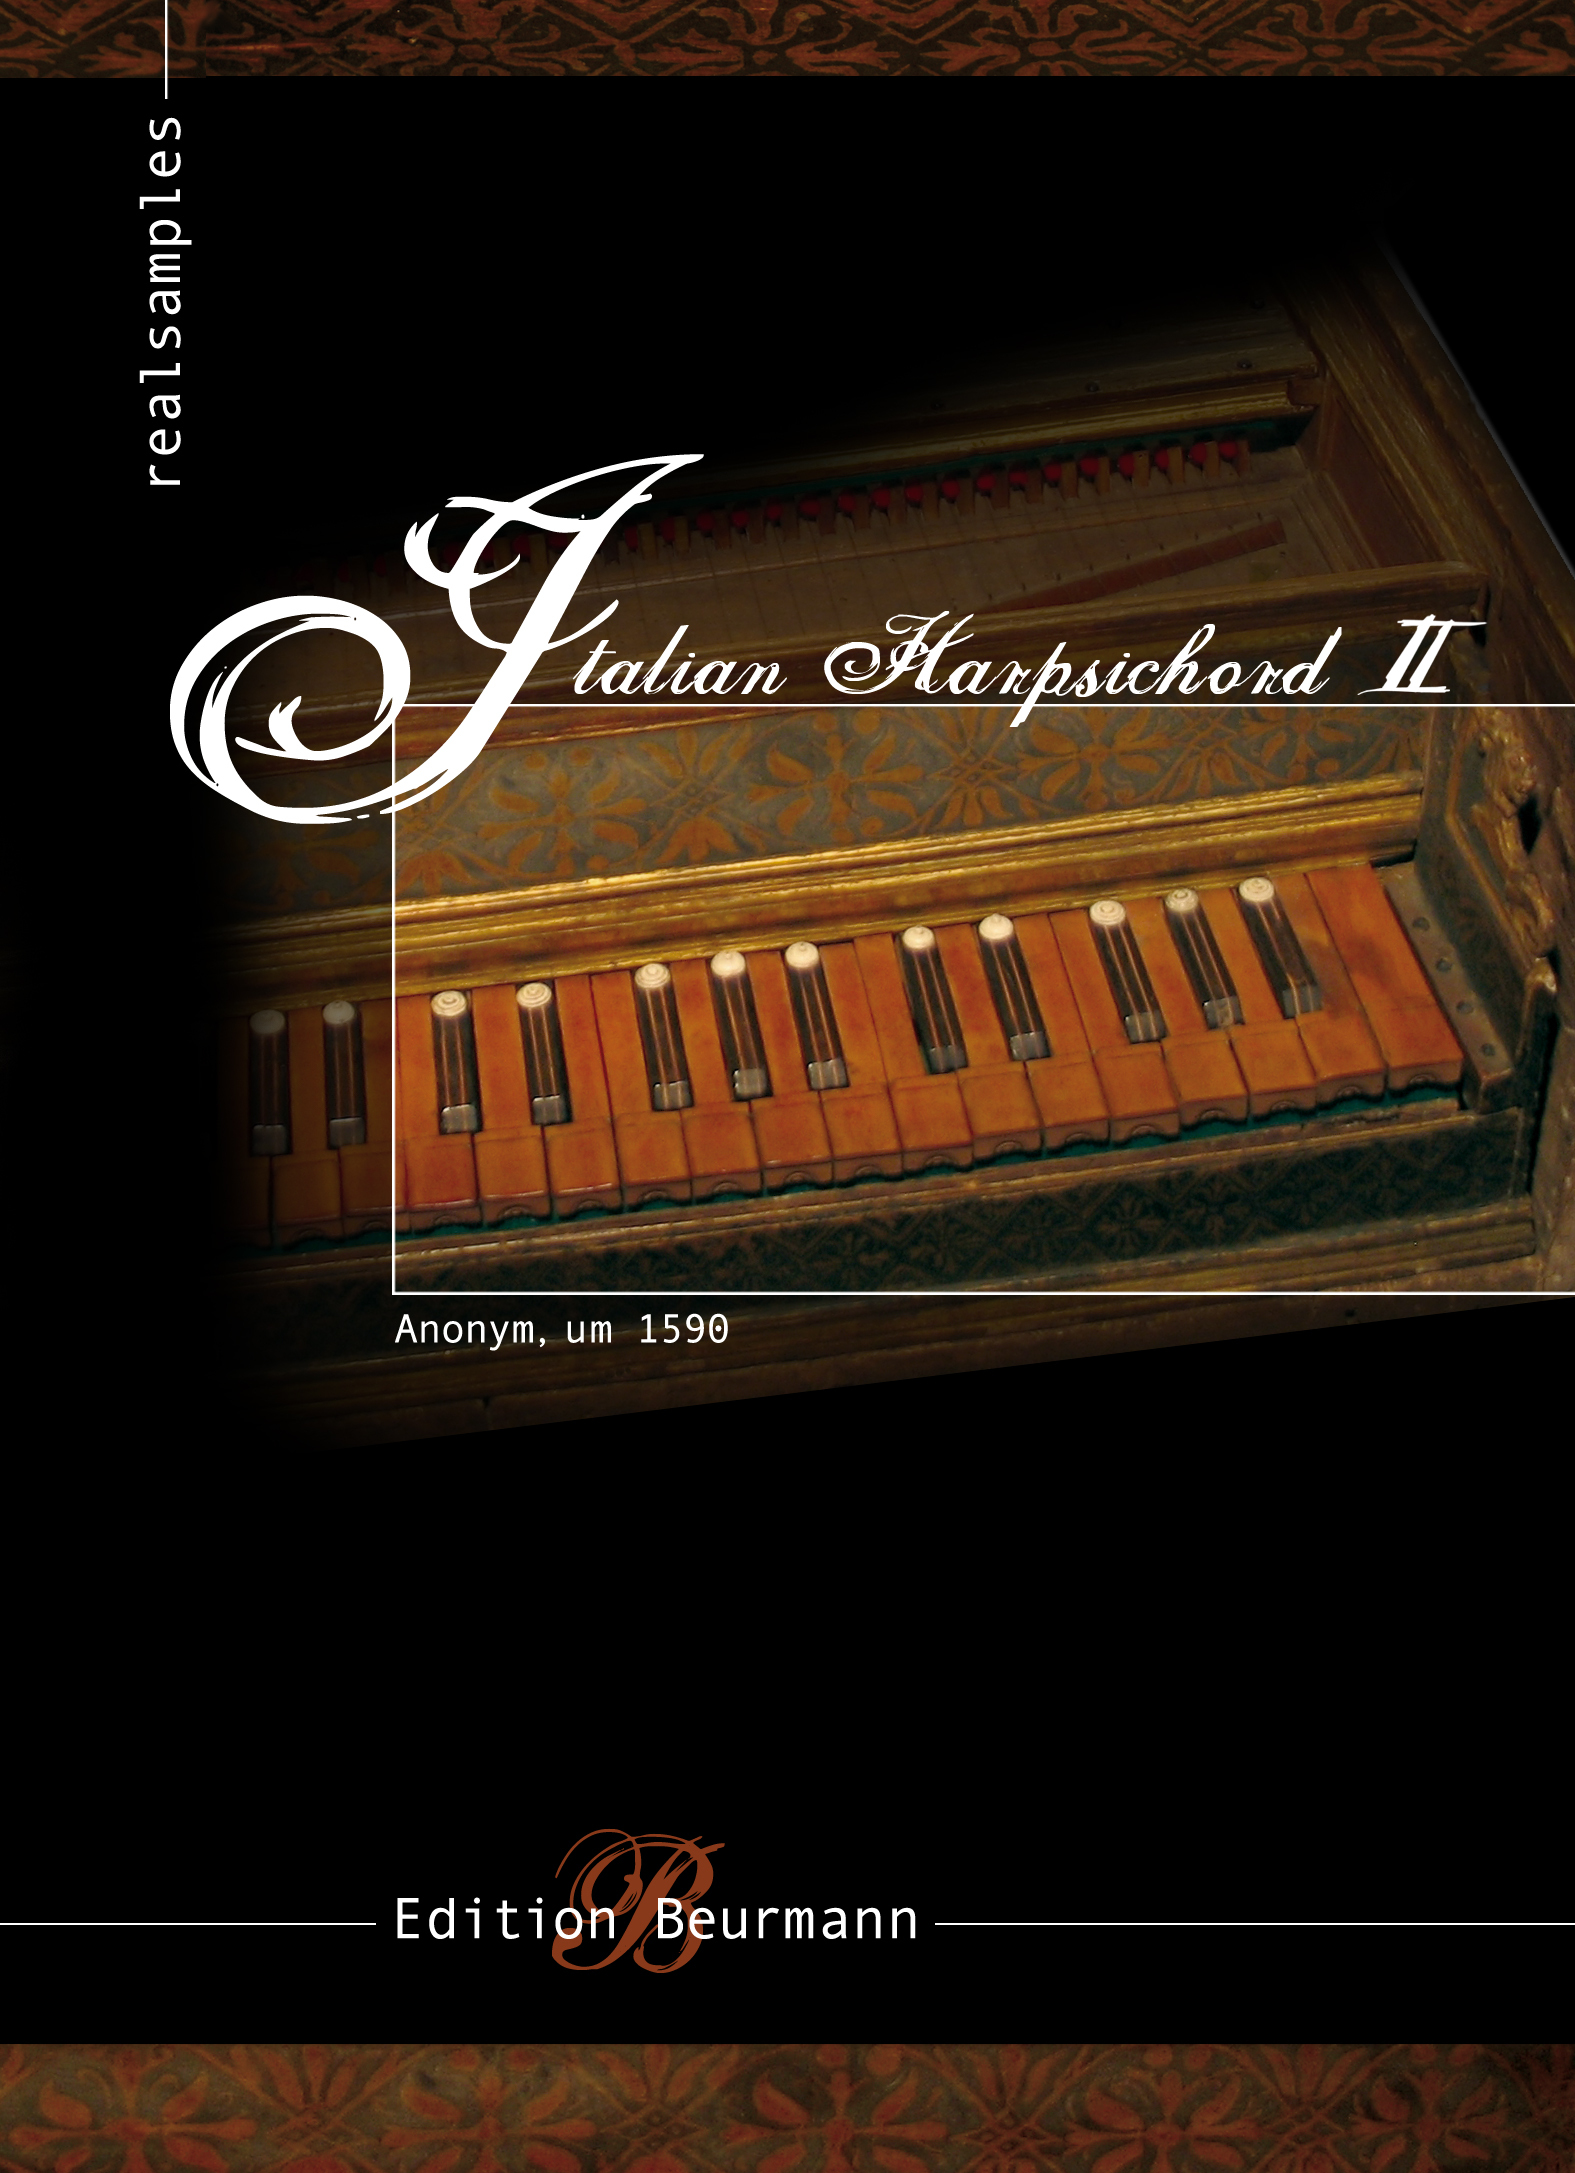 Italian_Harpsichord_II_Front